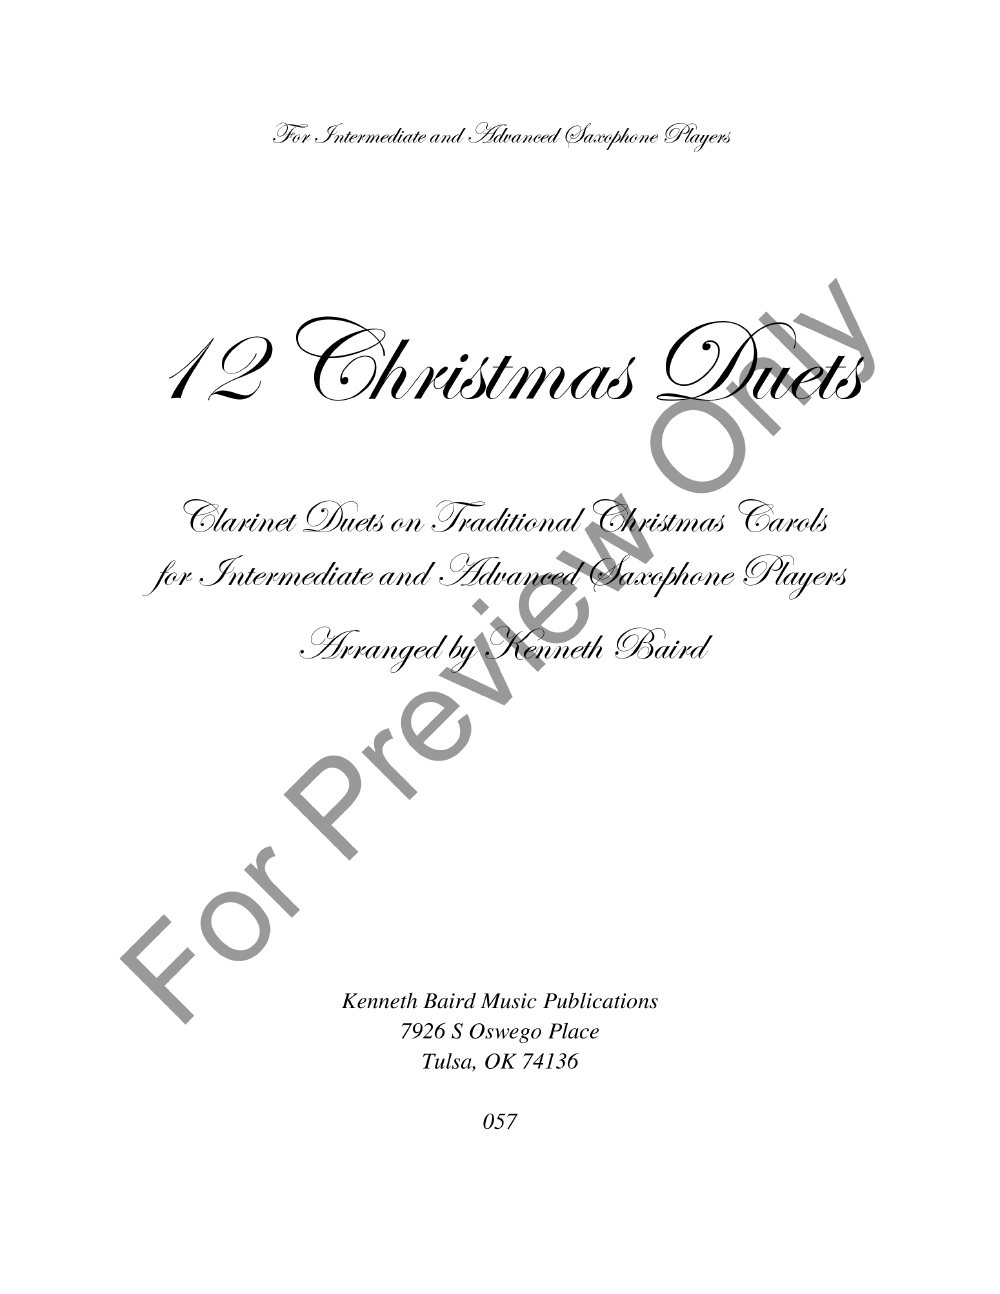 12 Christmas Duets for Saxophones TENOR SAX P.O.D.